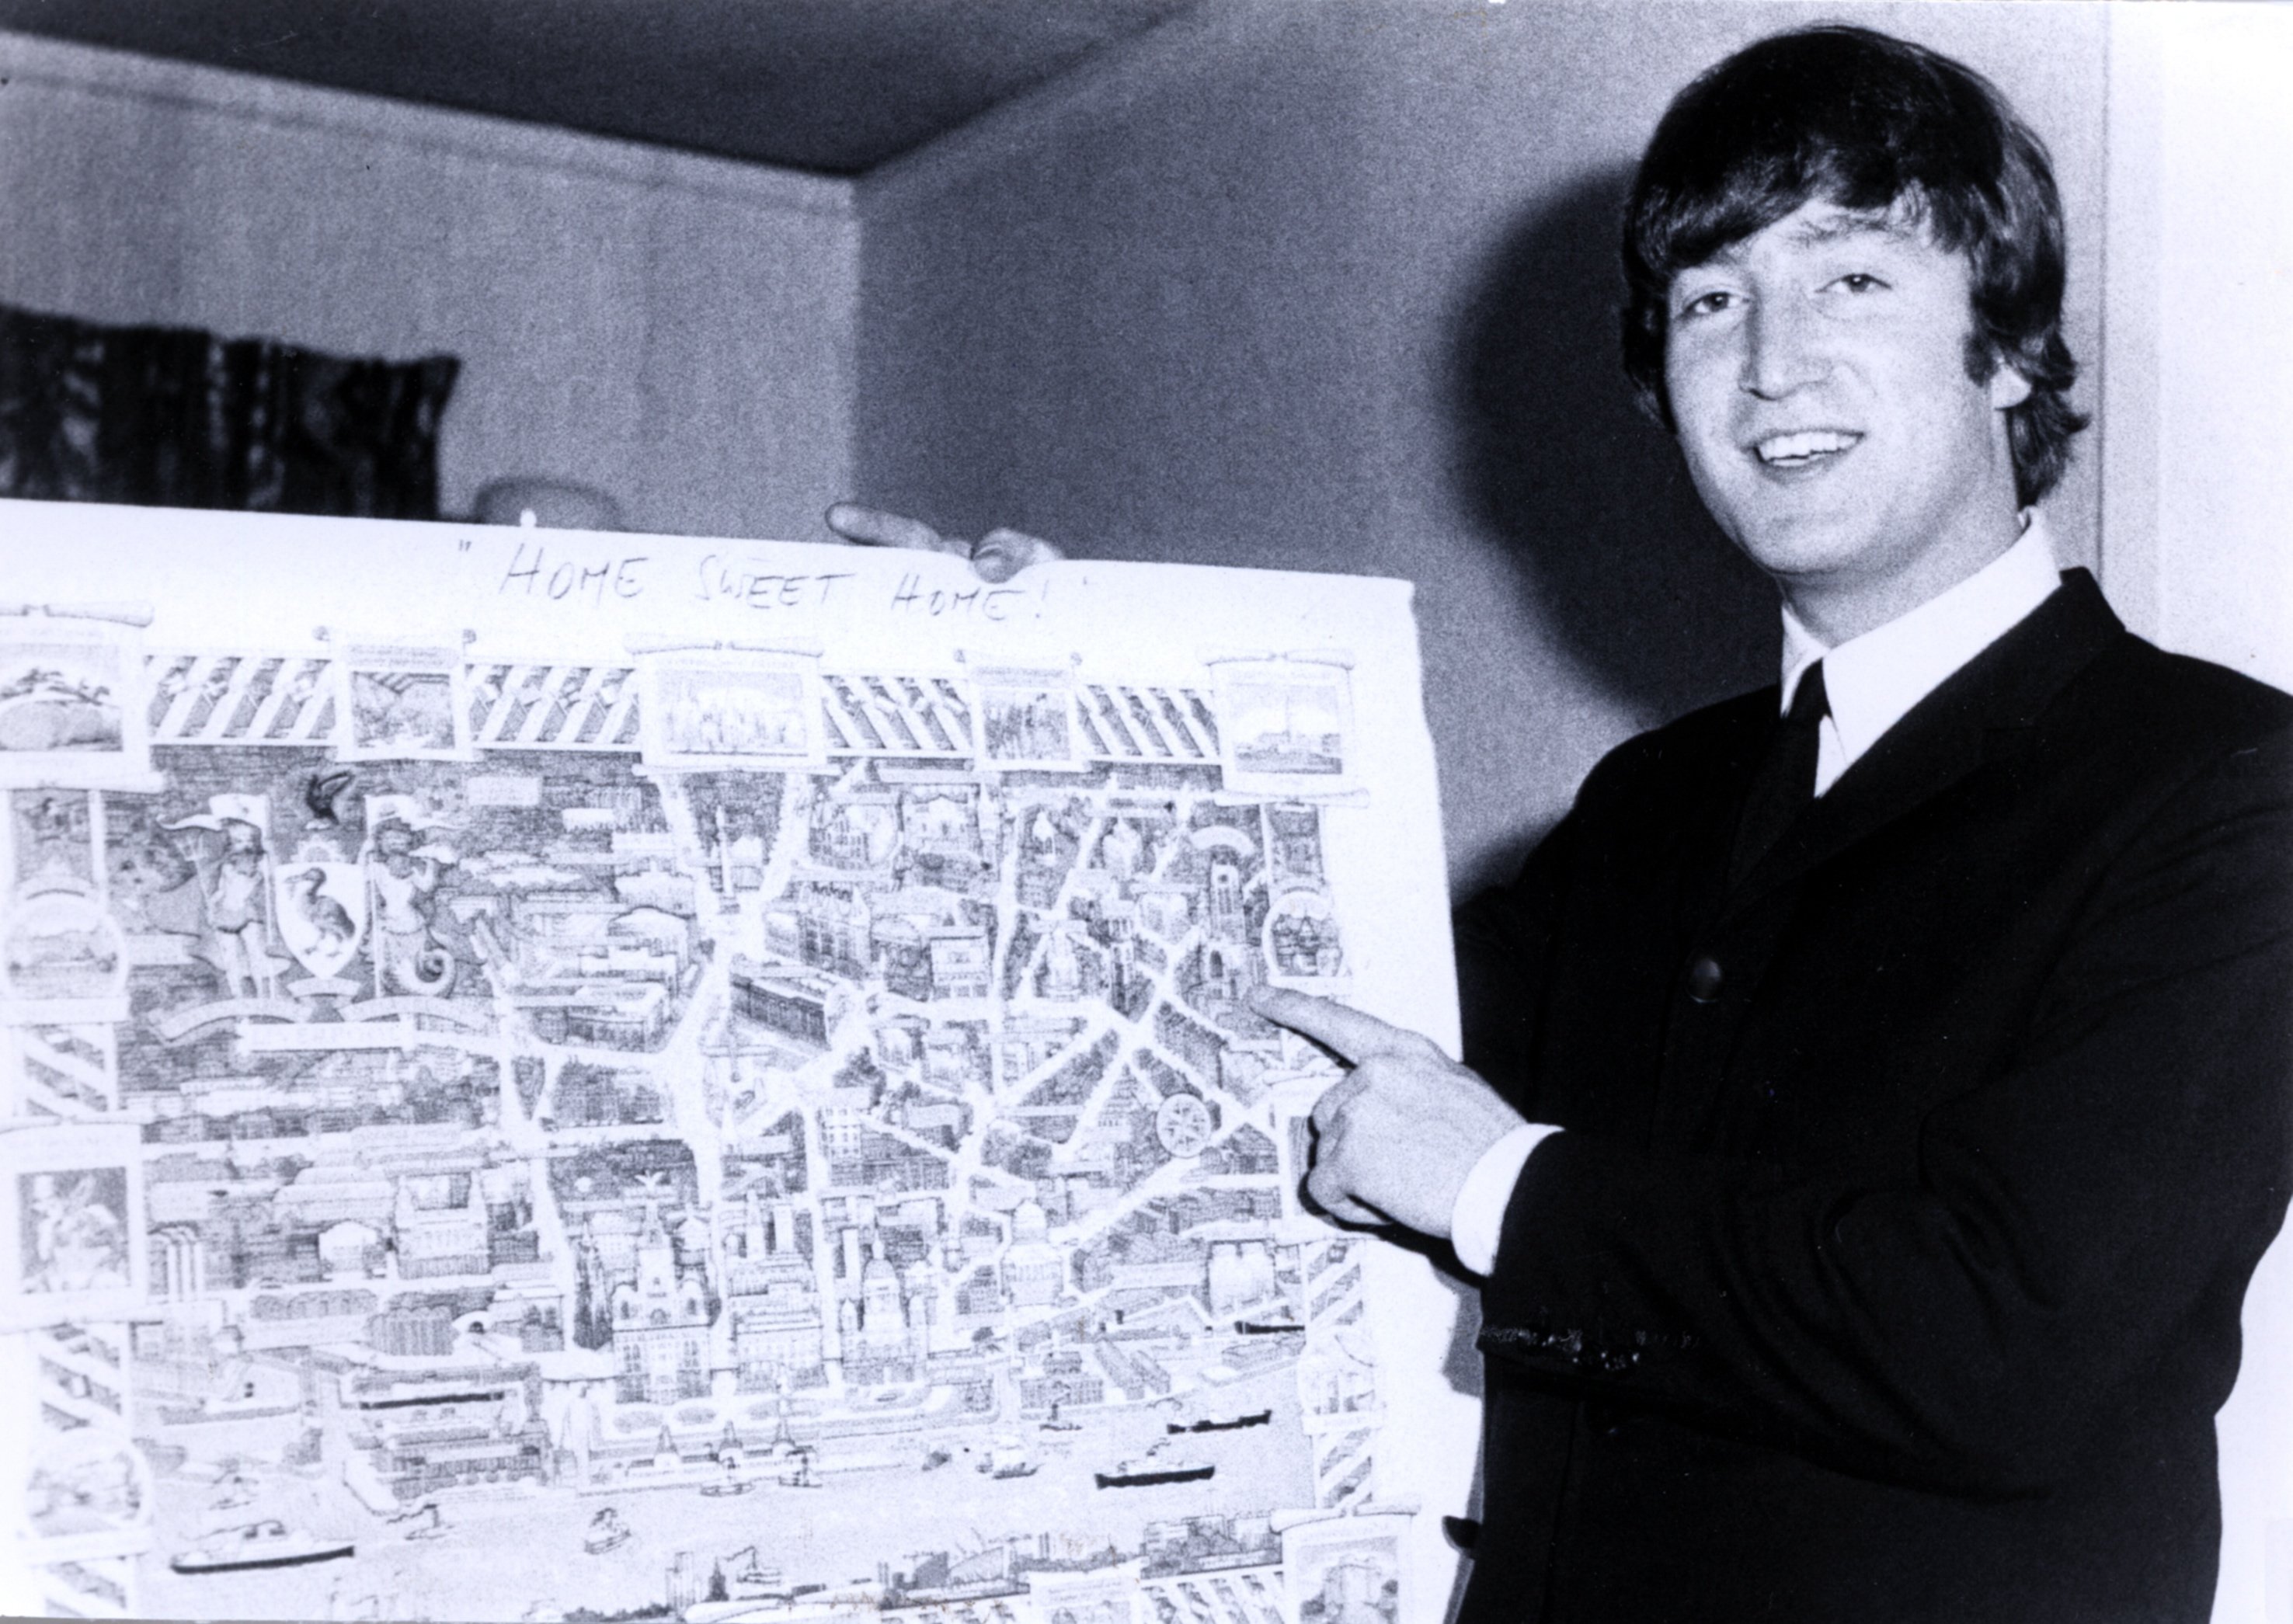 John Lennon with a map